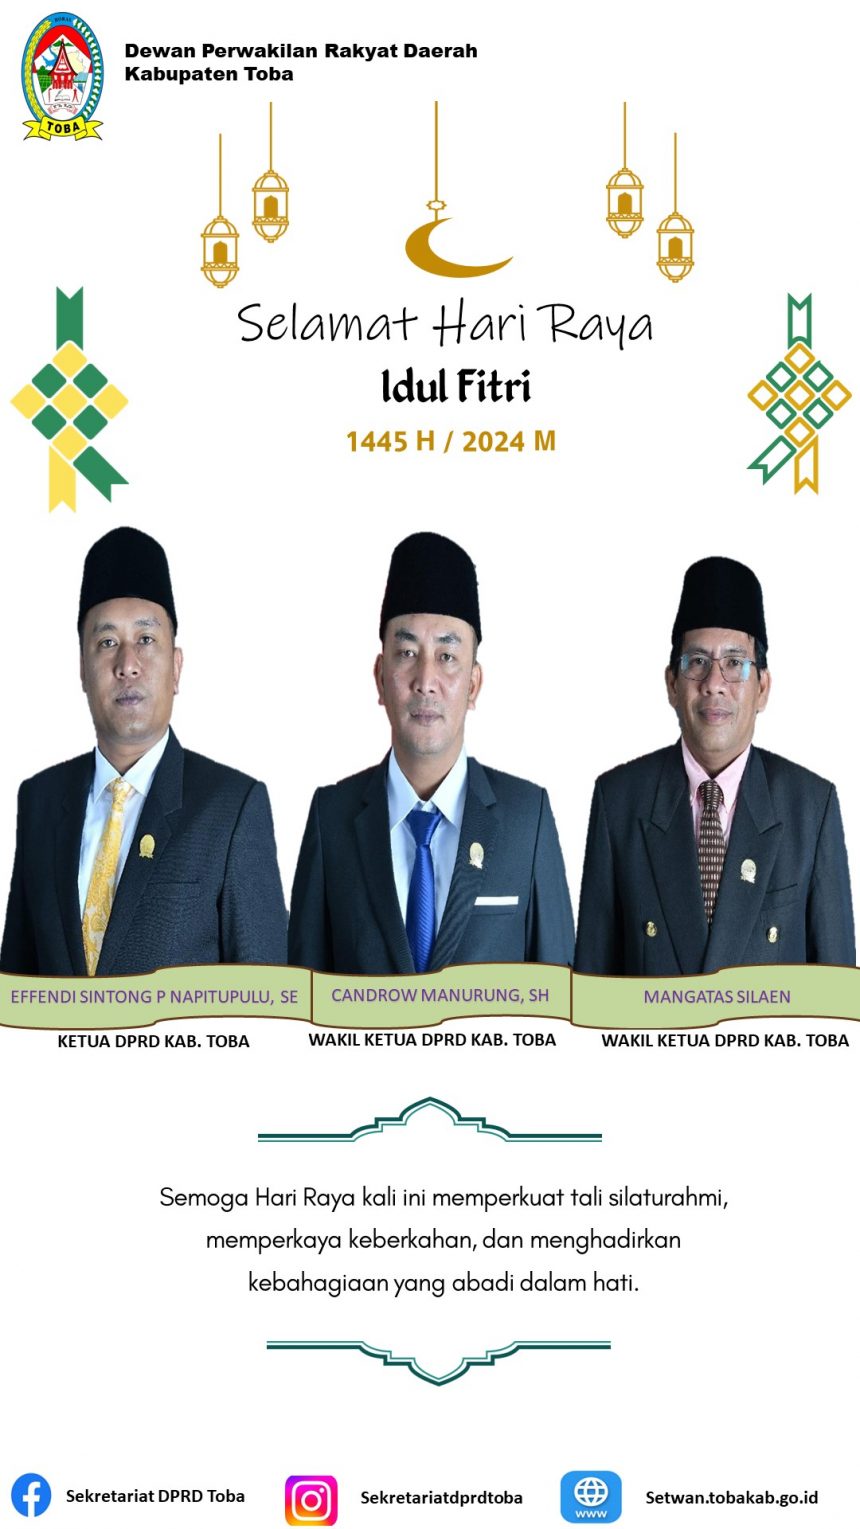 DPRD dan Sekretariat DPRD Kabupaten Toba Mengucapkan “Selamat Hari Raya Idul Fitri 1445 H/2024 , Mohon Maaf Lahir dan Batin